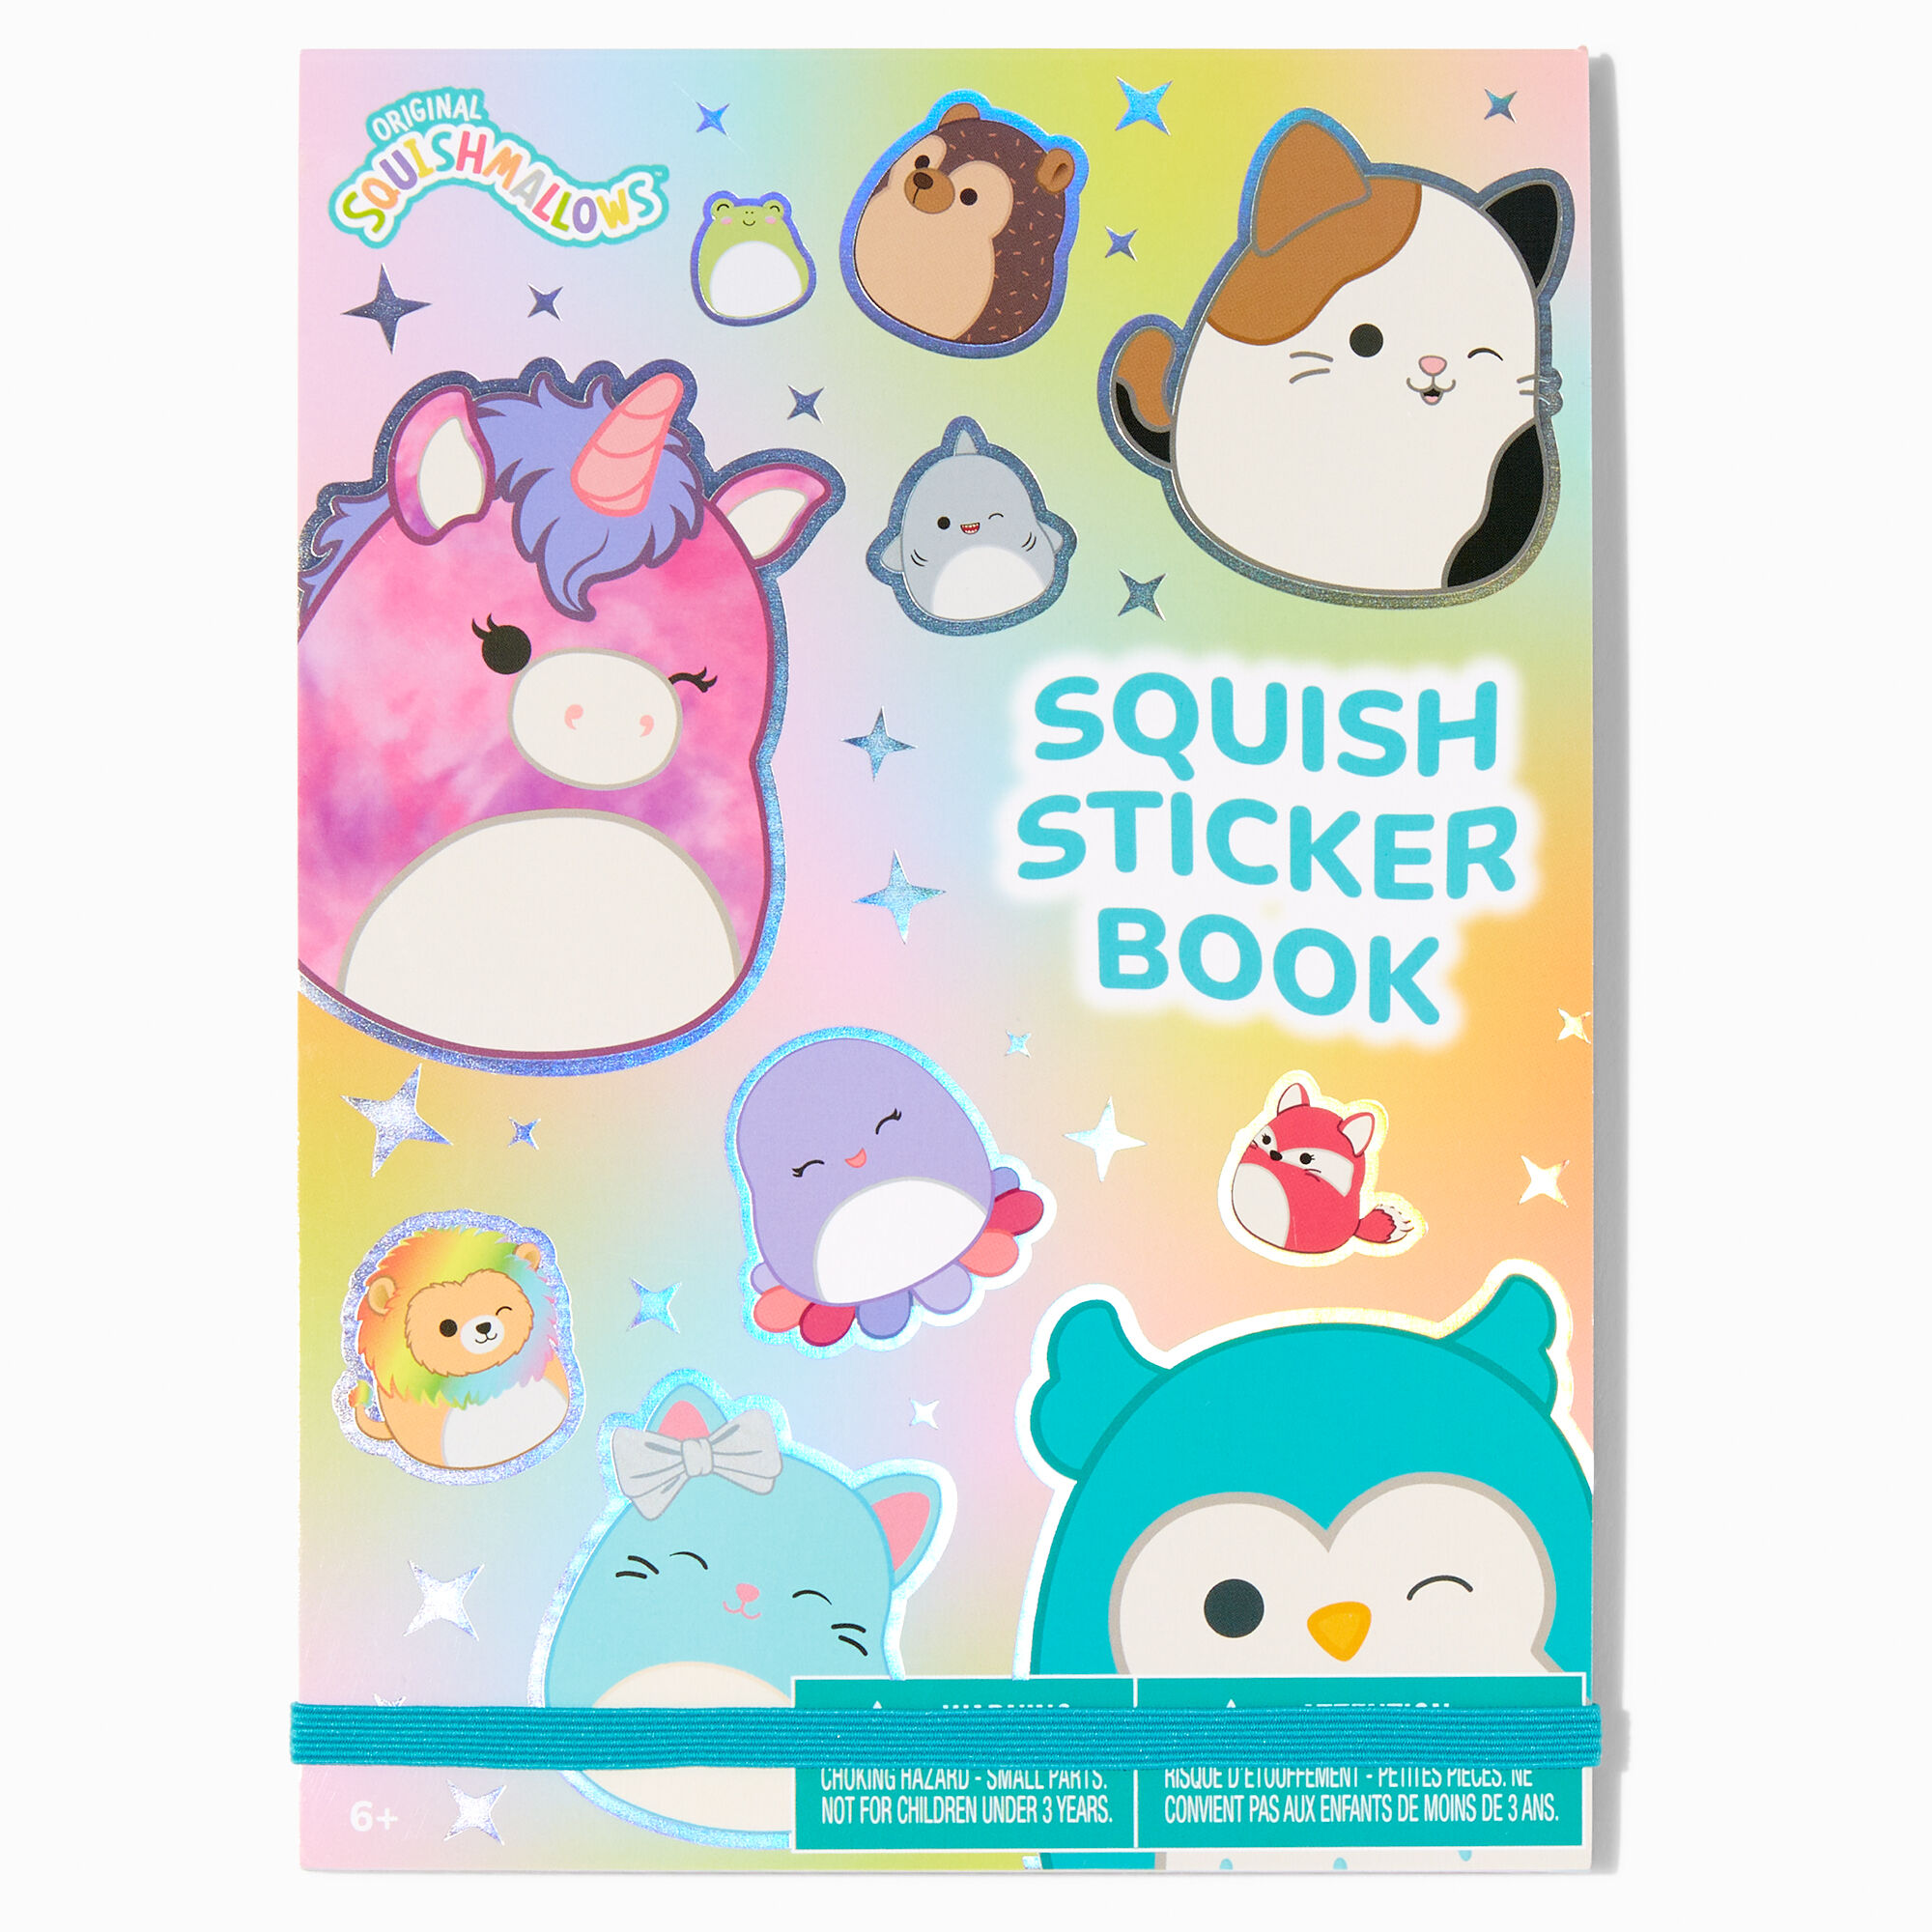 Zegsy Super Cool Squishmallows Stickers Book